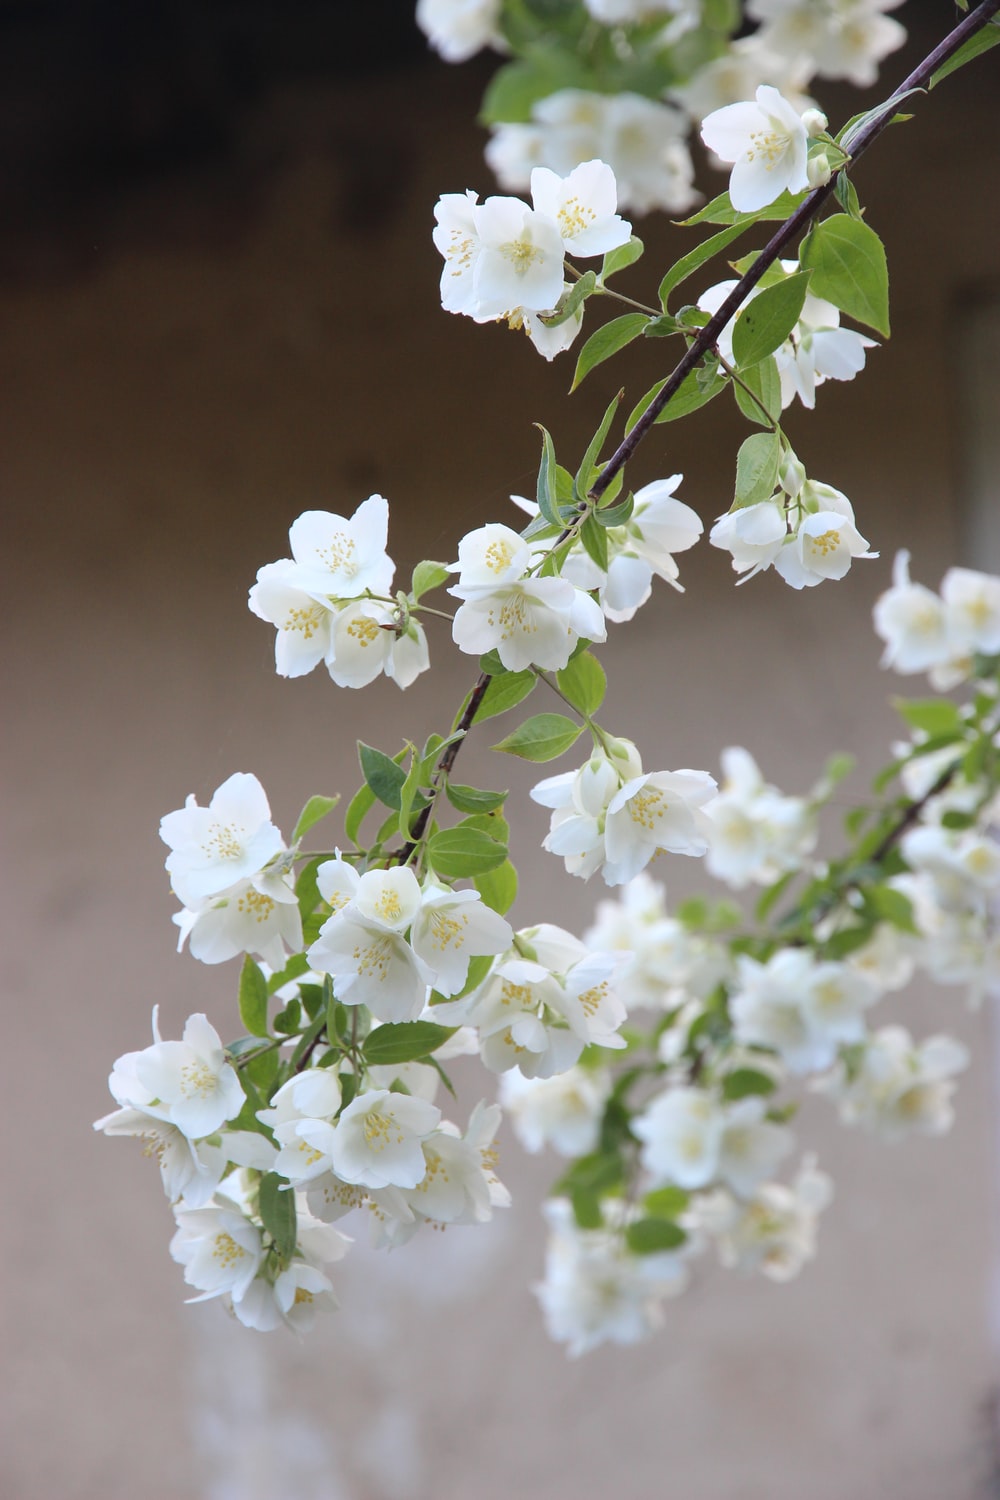 Jasmine Flower Picture. Download Free Image